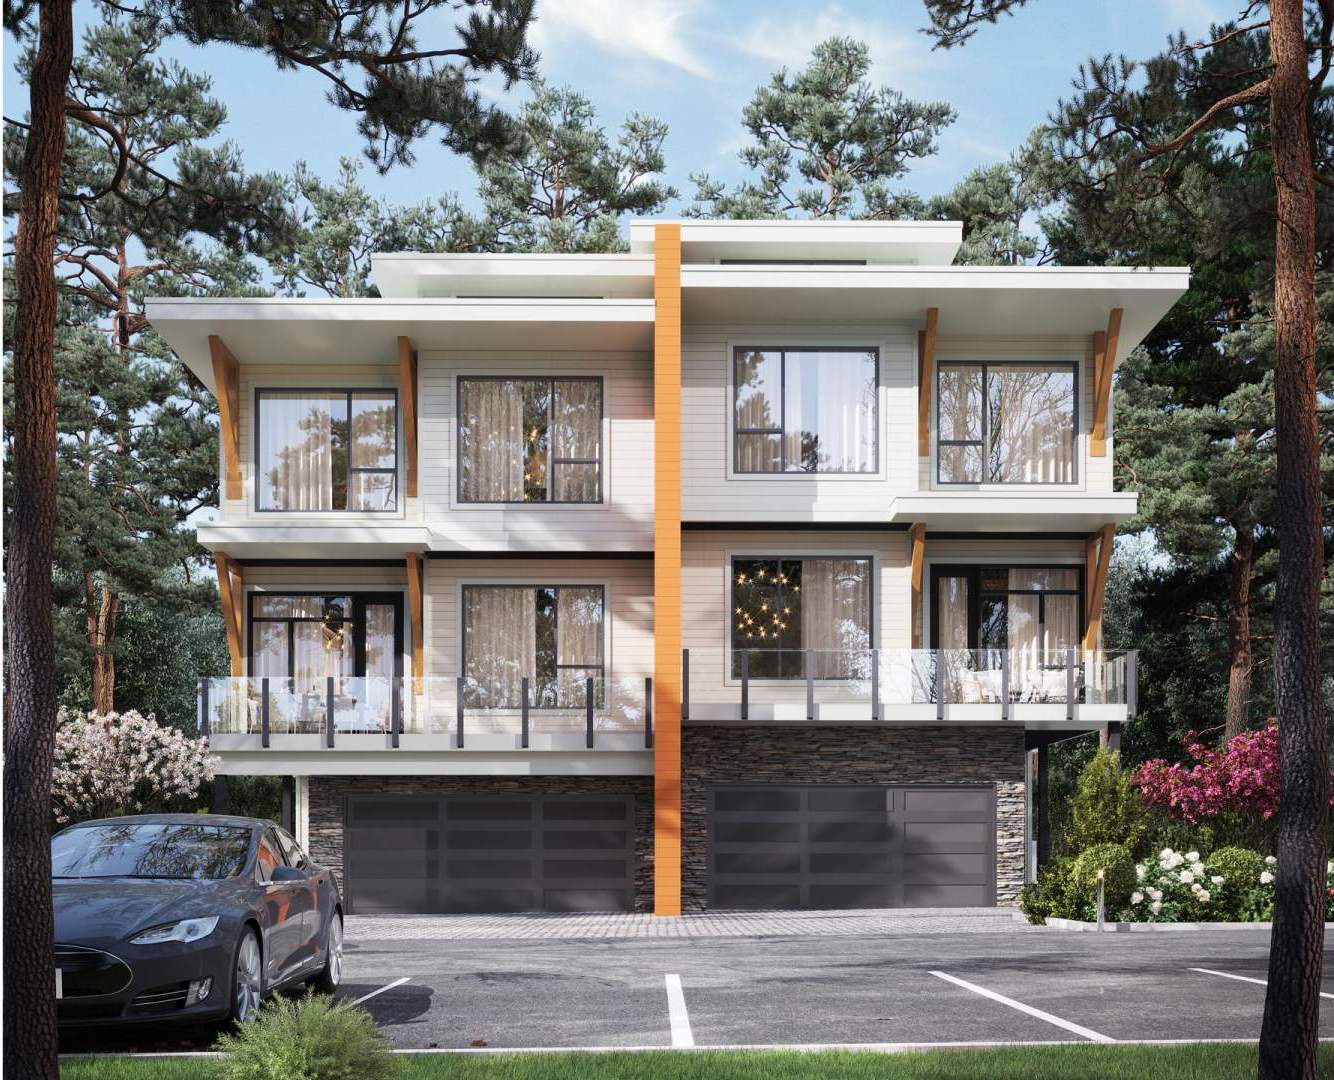 Homes come in 3-storey monoplex, duplex, and pentaplex configurations.